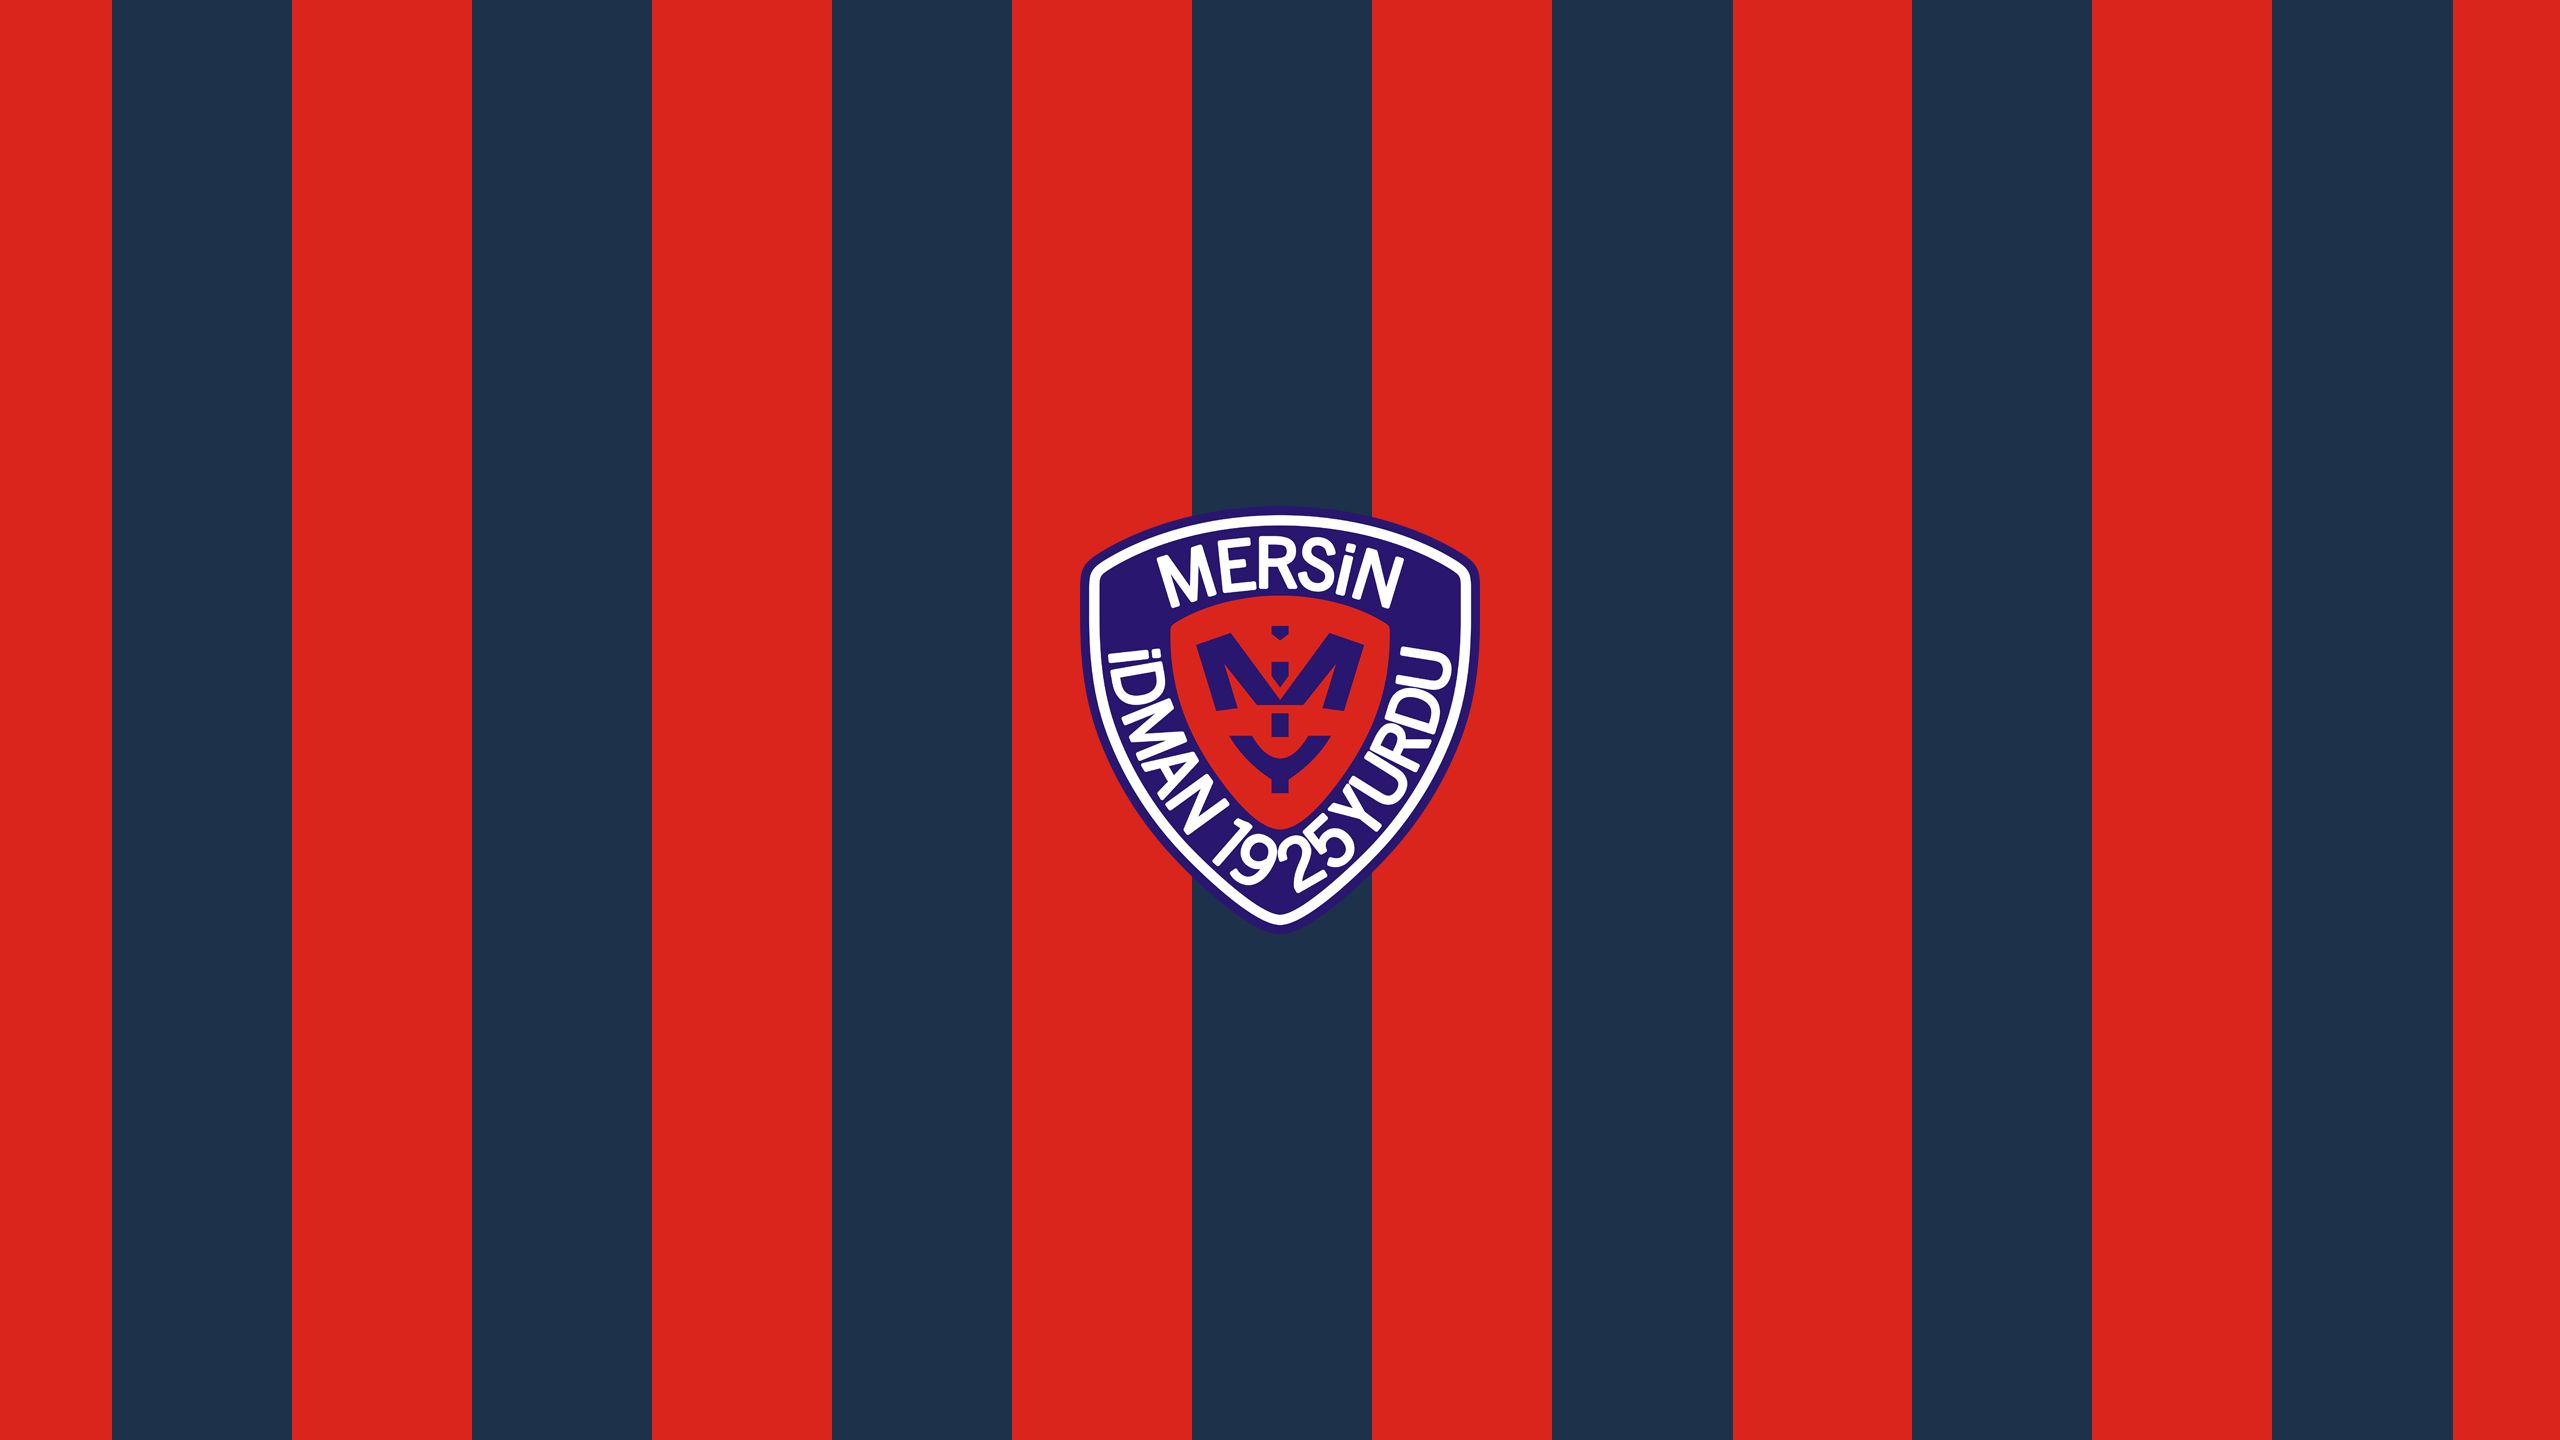 Baixar papel de parede para celular de Esportes, Futebol, Logotipo, Emblema, Mersin Idman Yurdu gratuito.